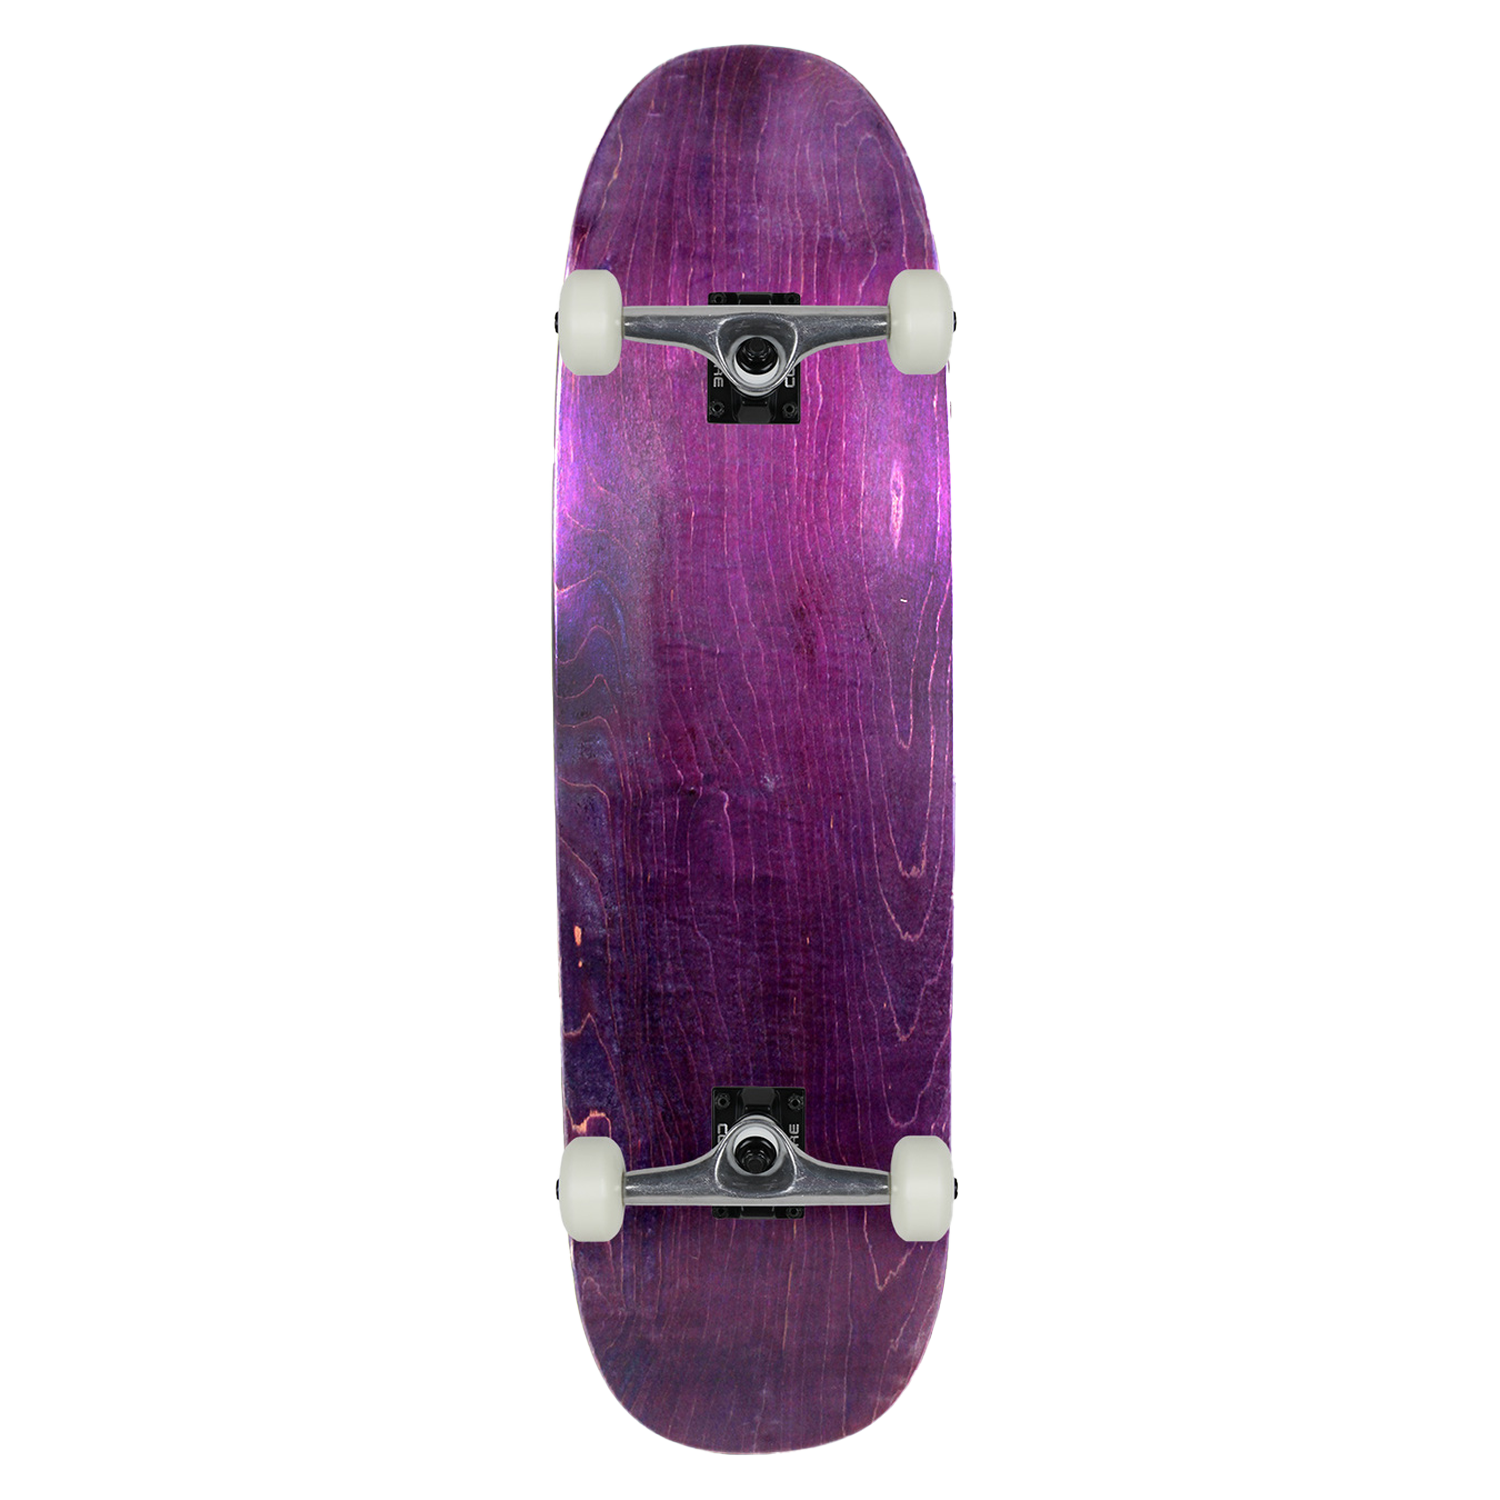 Moose Skateboard Old School Complete Blunt Nose Popsicle Stain Purple 8.75in x 32.1in